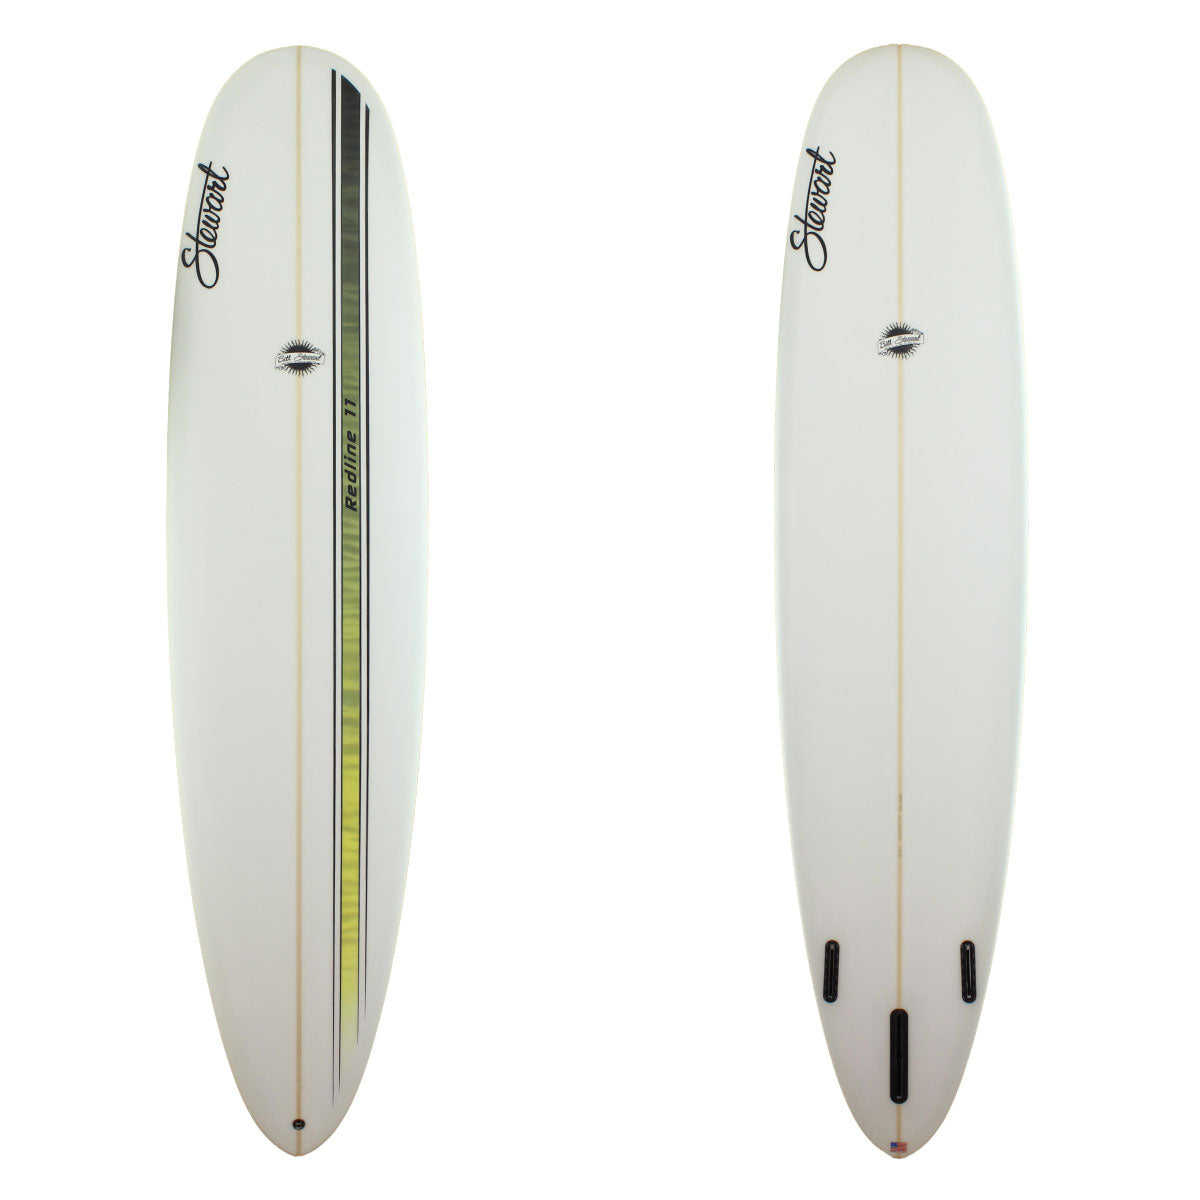 Stewart Surfboards Redline 11 longboard (9'0", 23 1/4", 3 1/8") with green and black stripes